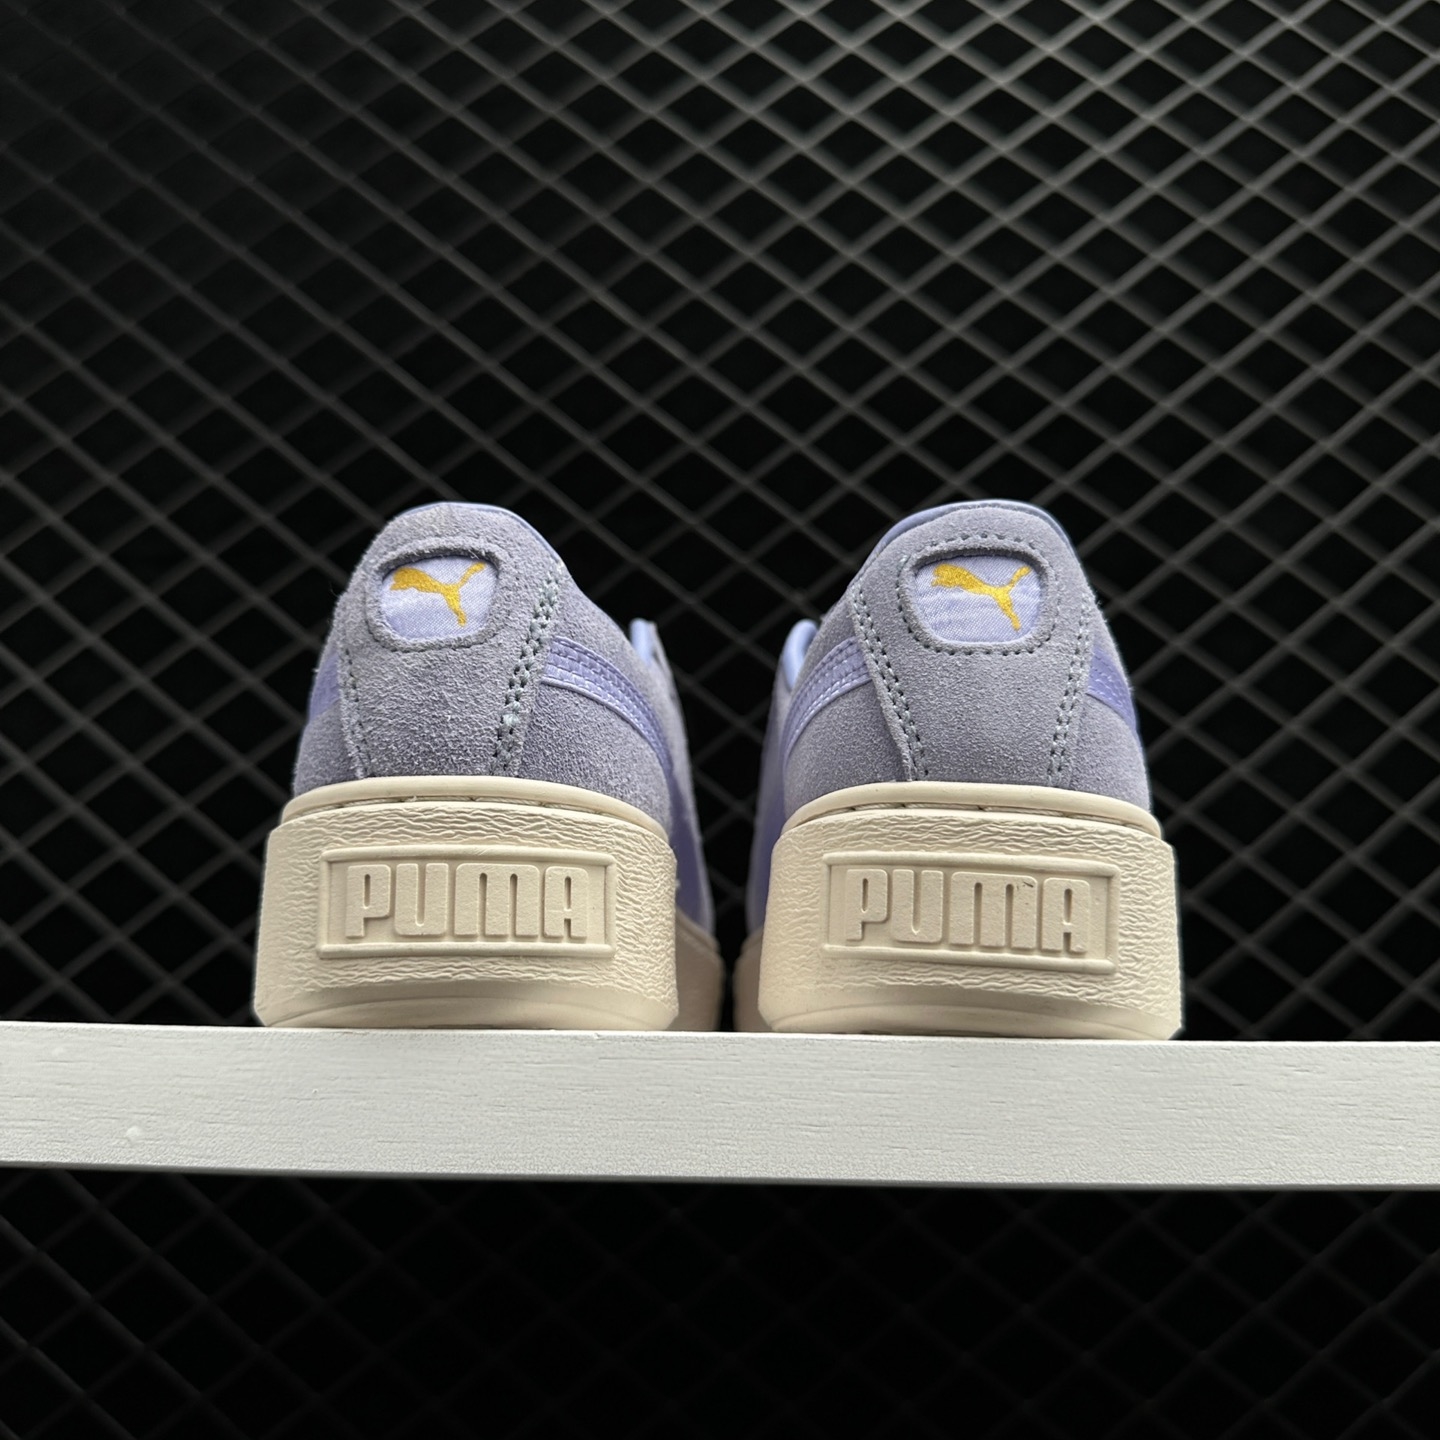 PUMA Suede Platform Satin Purple 365828-01 - Stylish and Versatile Women's Sneakers